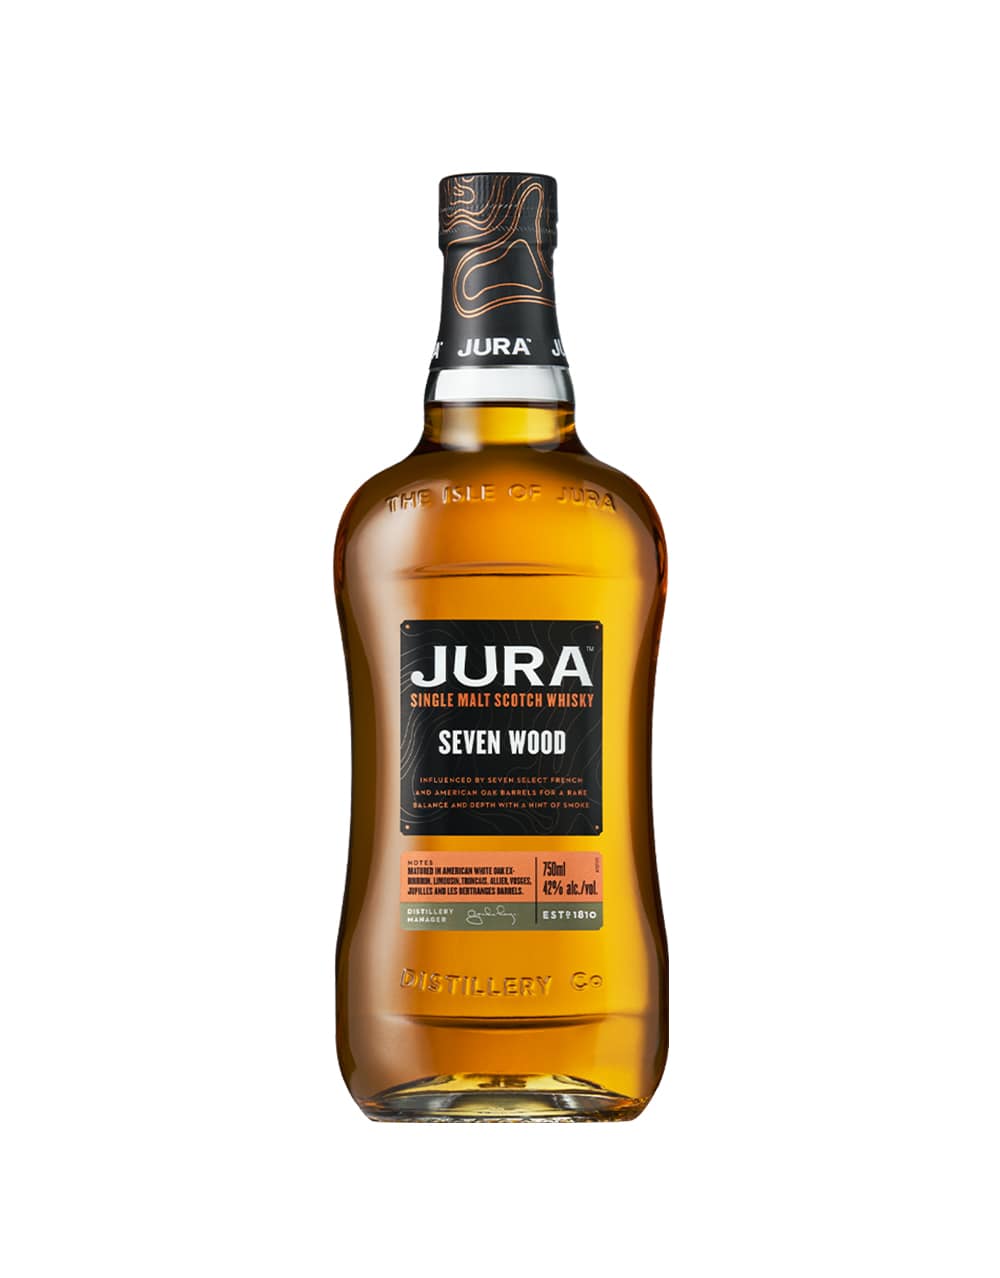 https://www.royalbatch.com/upload/products/1/jura-seven-wood-single-malt-scotch-whisky_RoyalBatch_Fy3qfvedCJrb.jpg